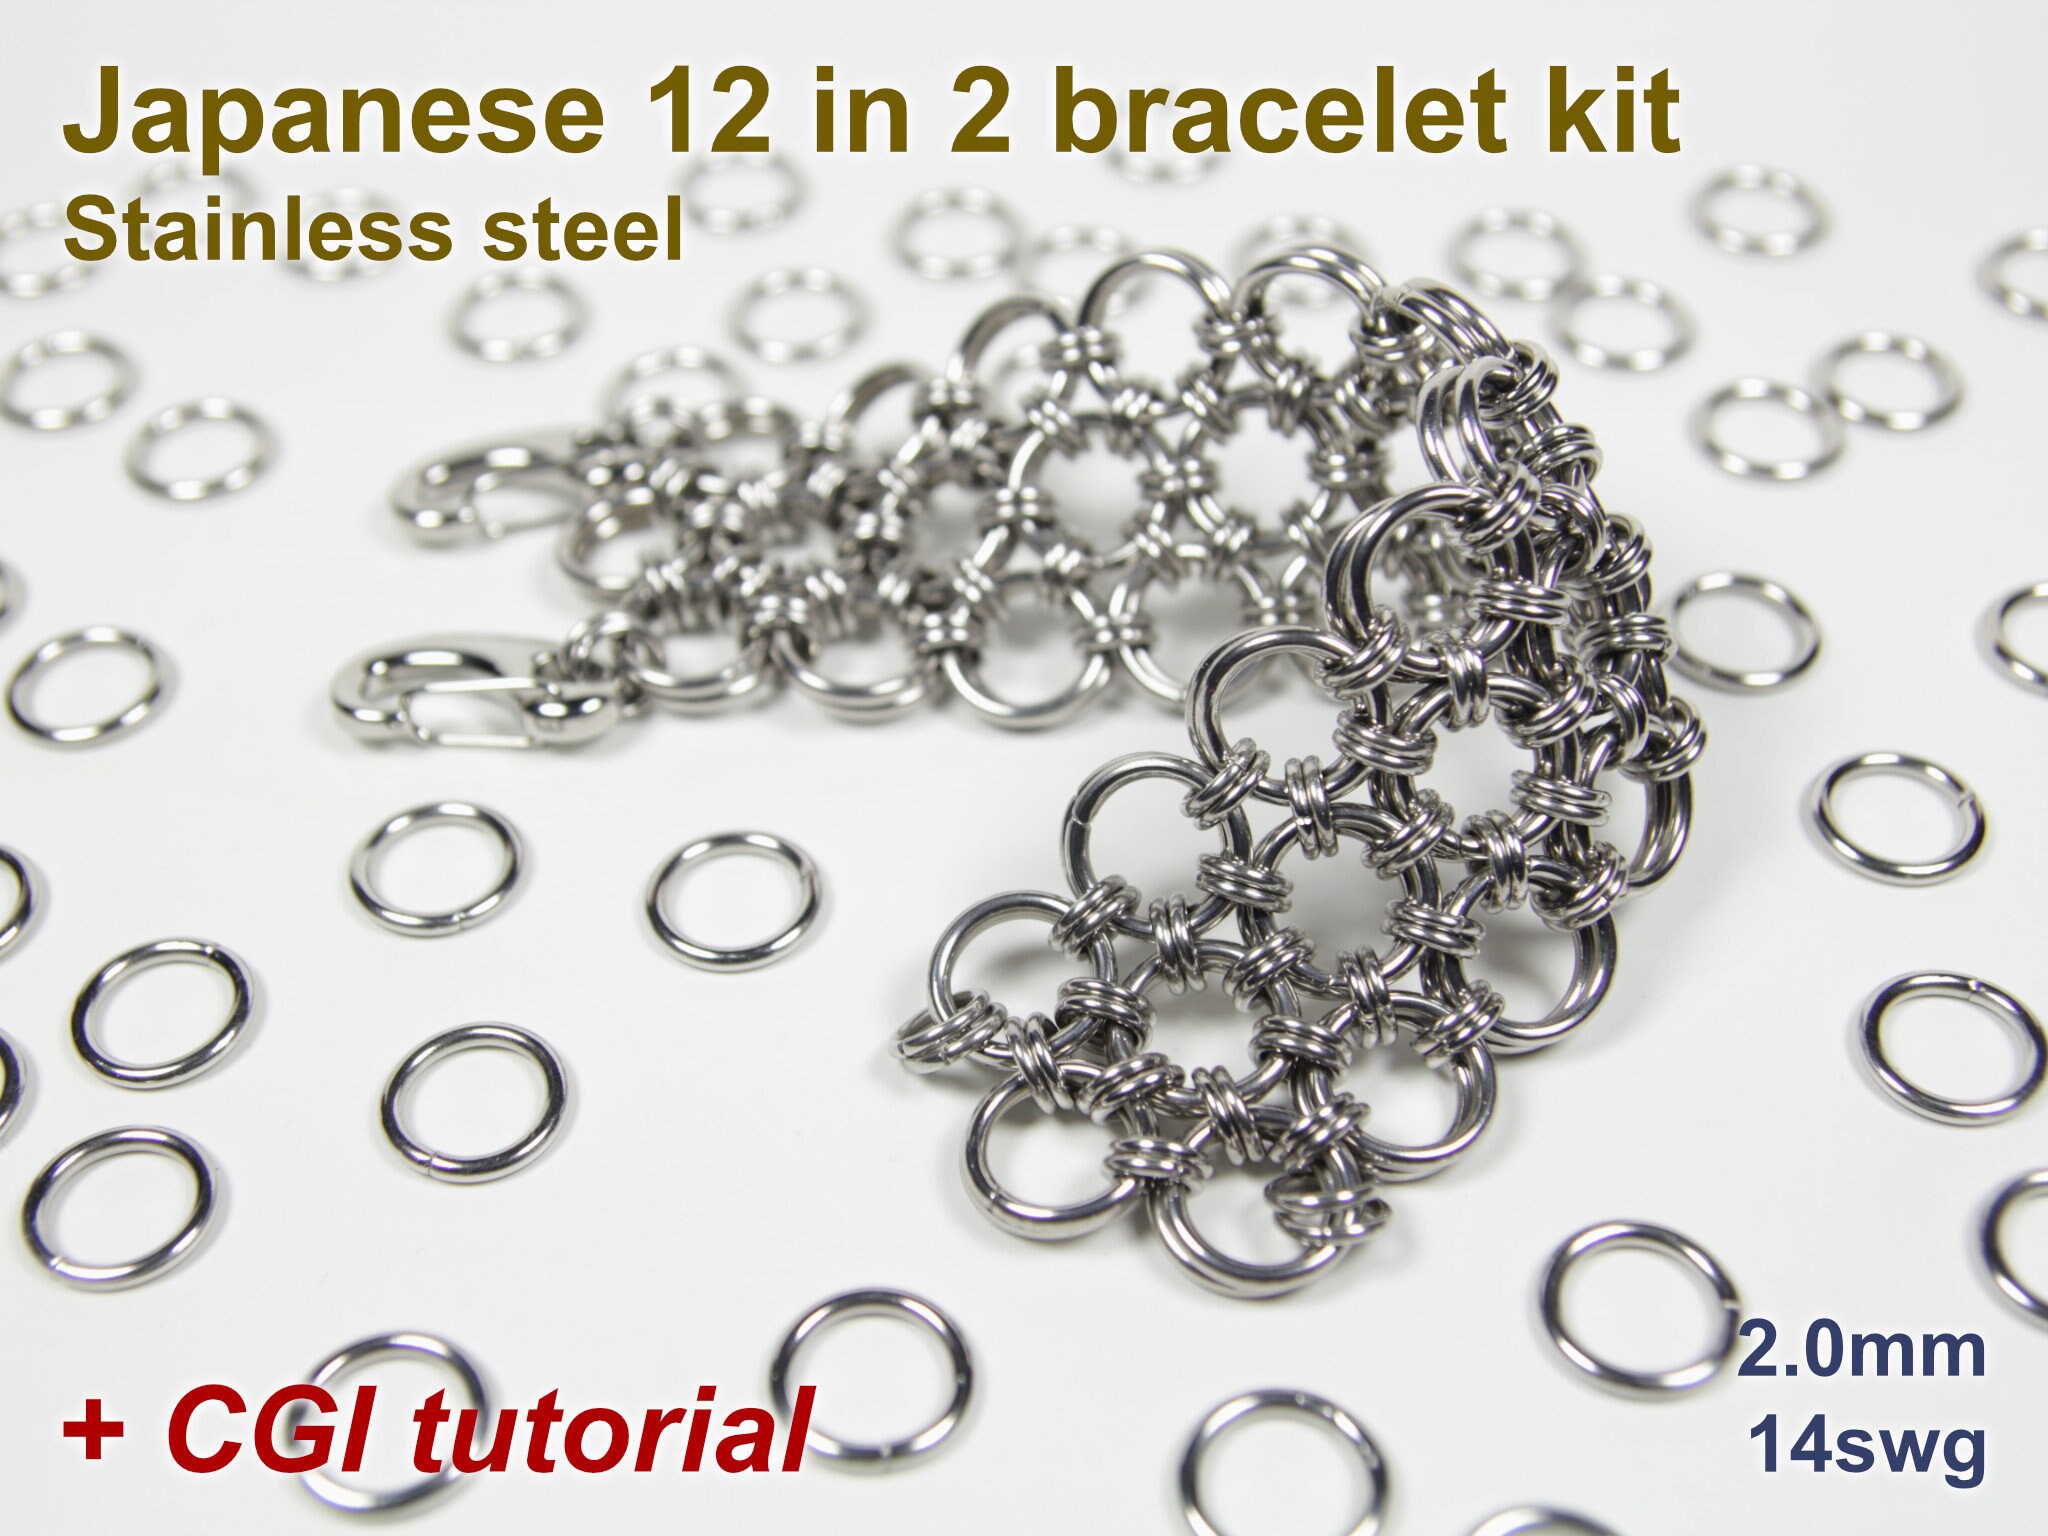 Kinged Vipera Berus Bracelet Kit, 1.4mm, Chainmaille Kit, Stainless Steel,  DIY Kit, Jump Rings, Chainmail Bracelet Kit, Chainmail Tutorial 